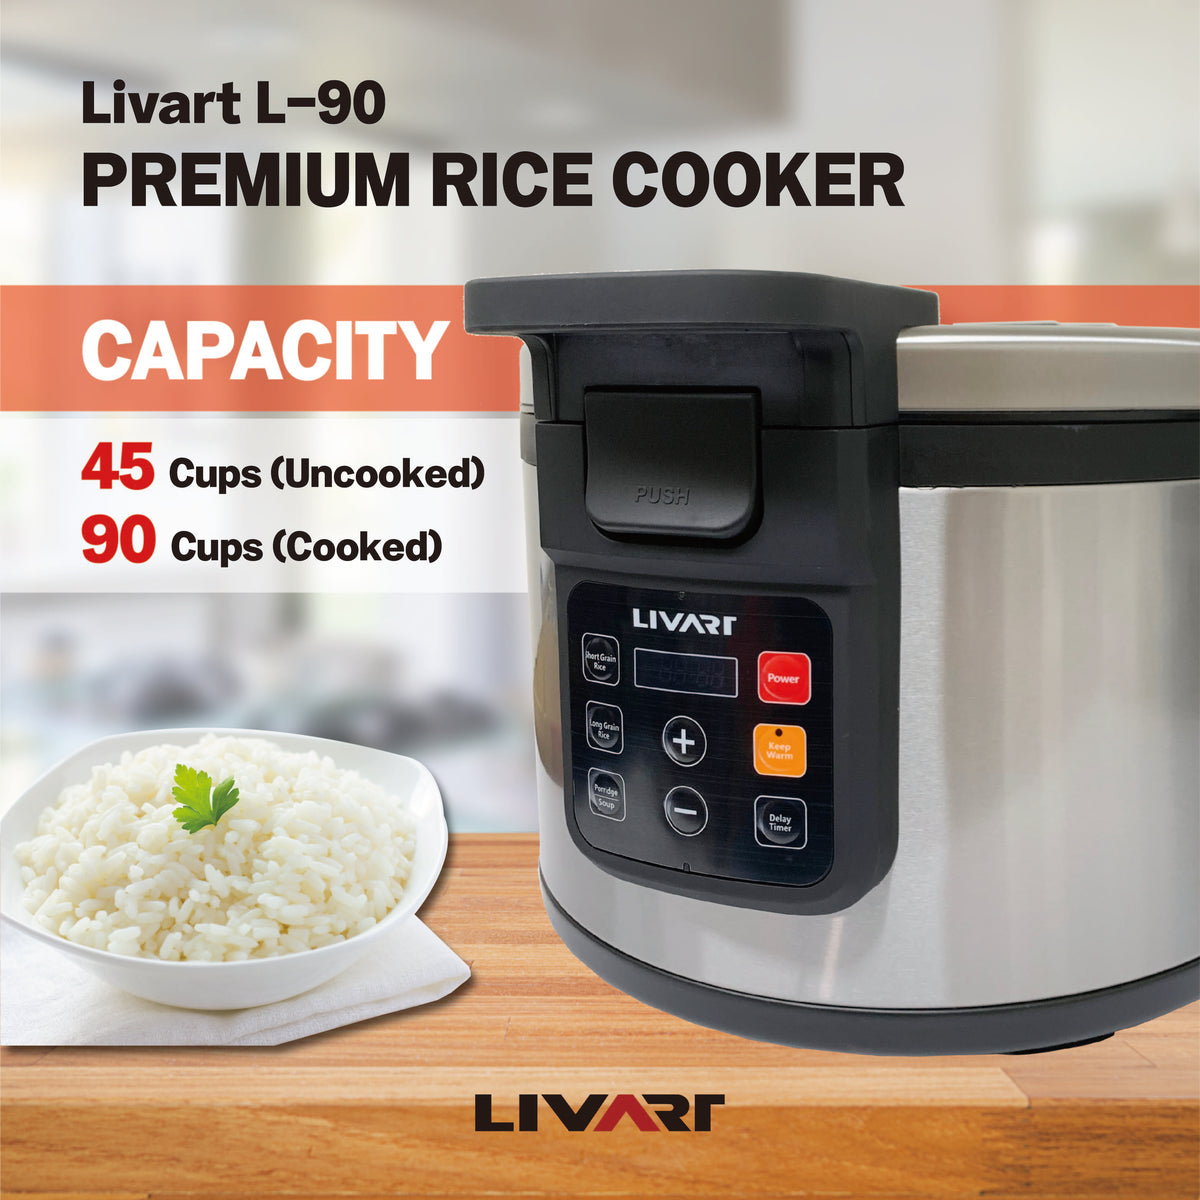 Livart Commercial 30 Cup Rice Cooker – The Livart Group